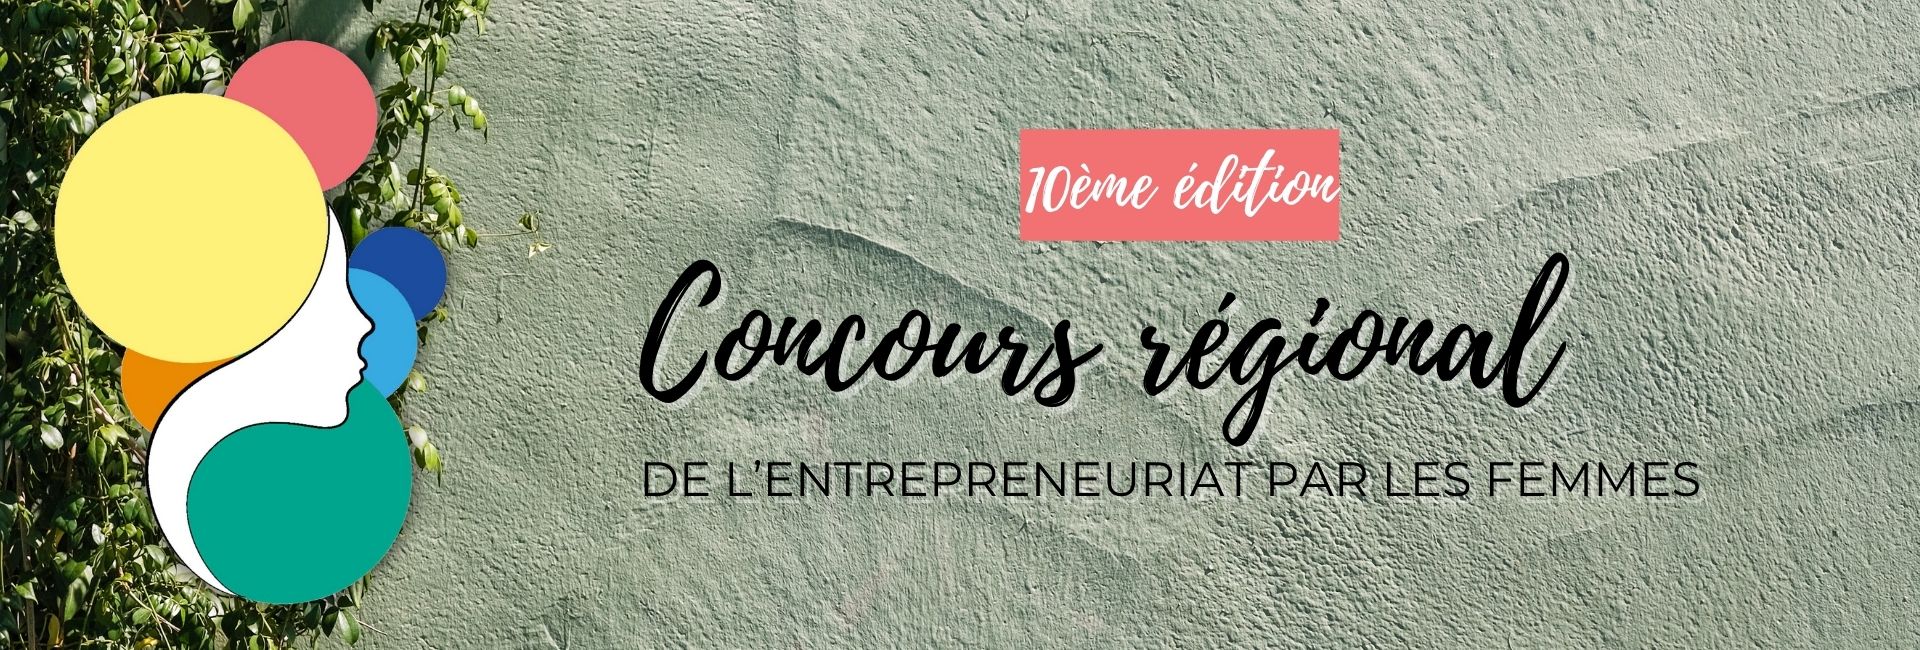 banniere-concours-regional-entreprenariat-feminin